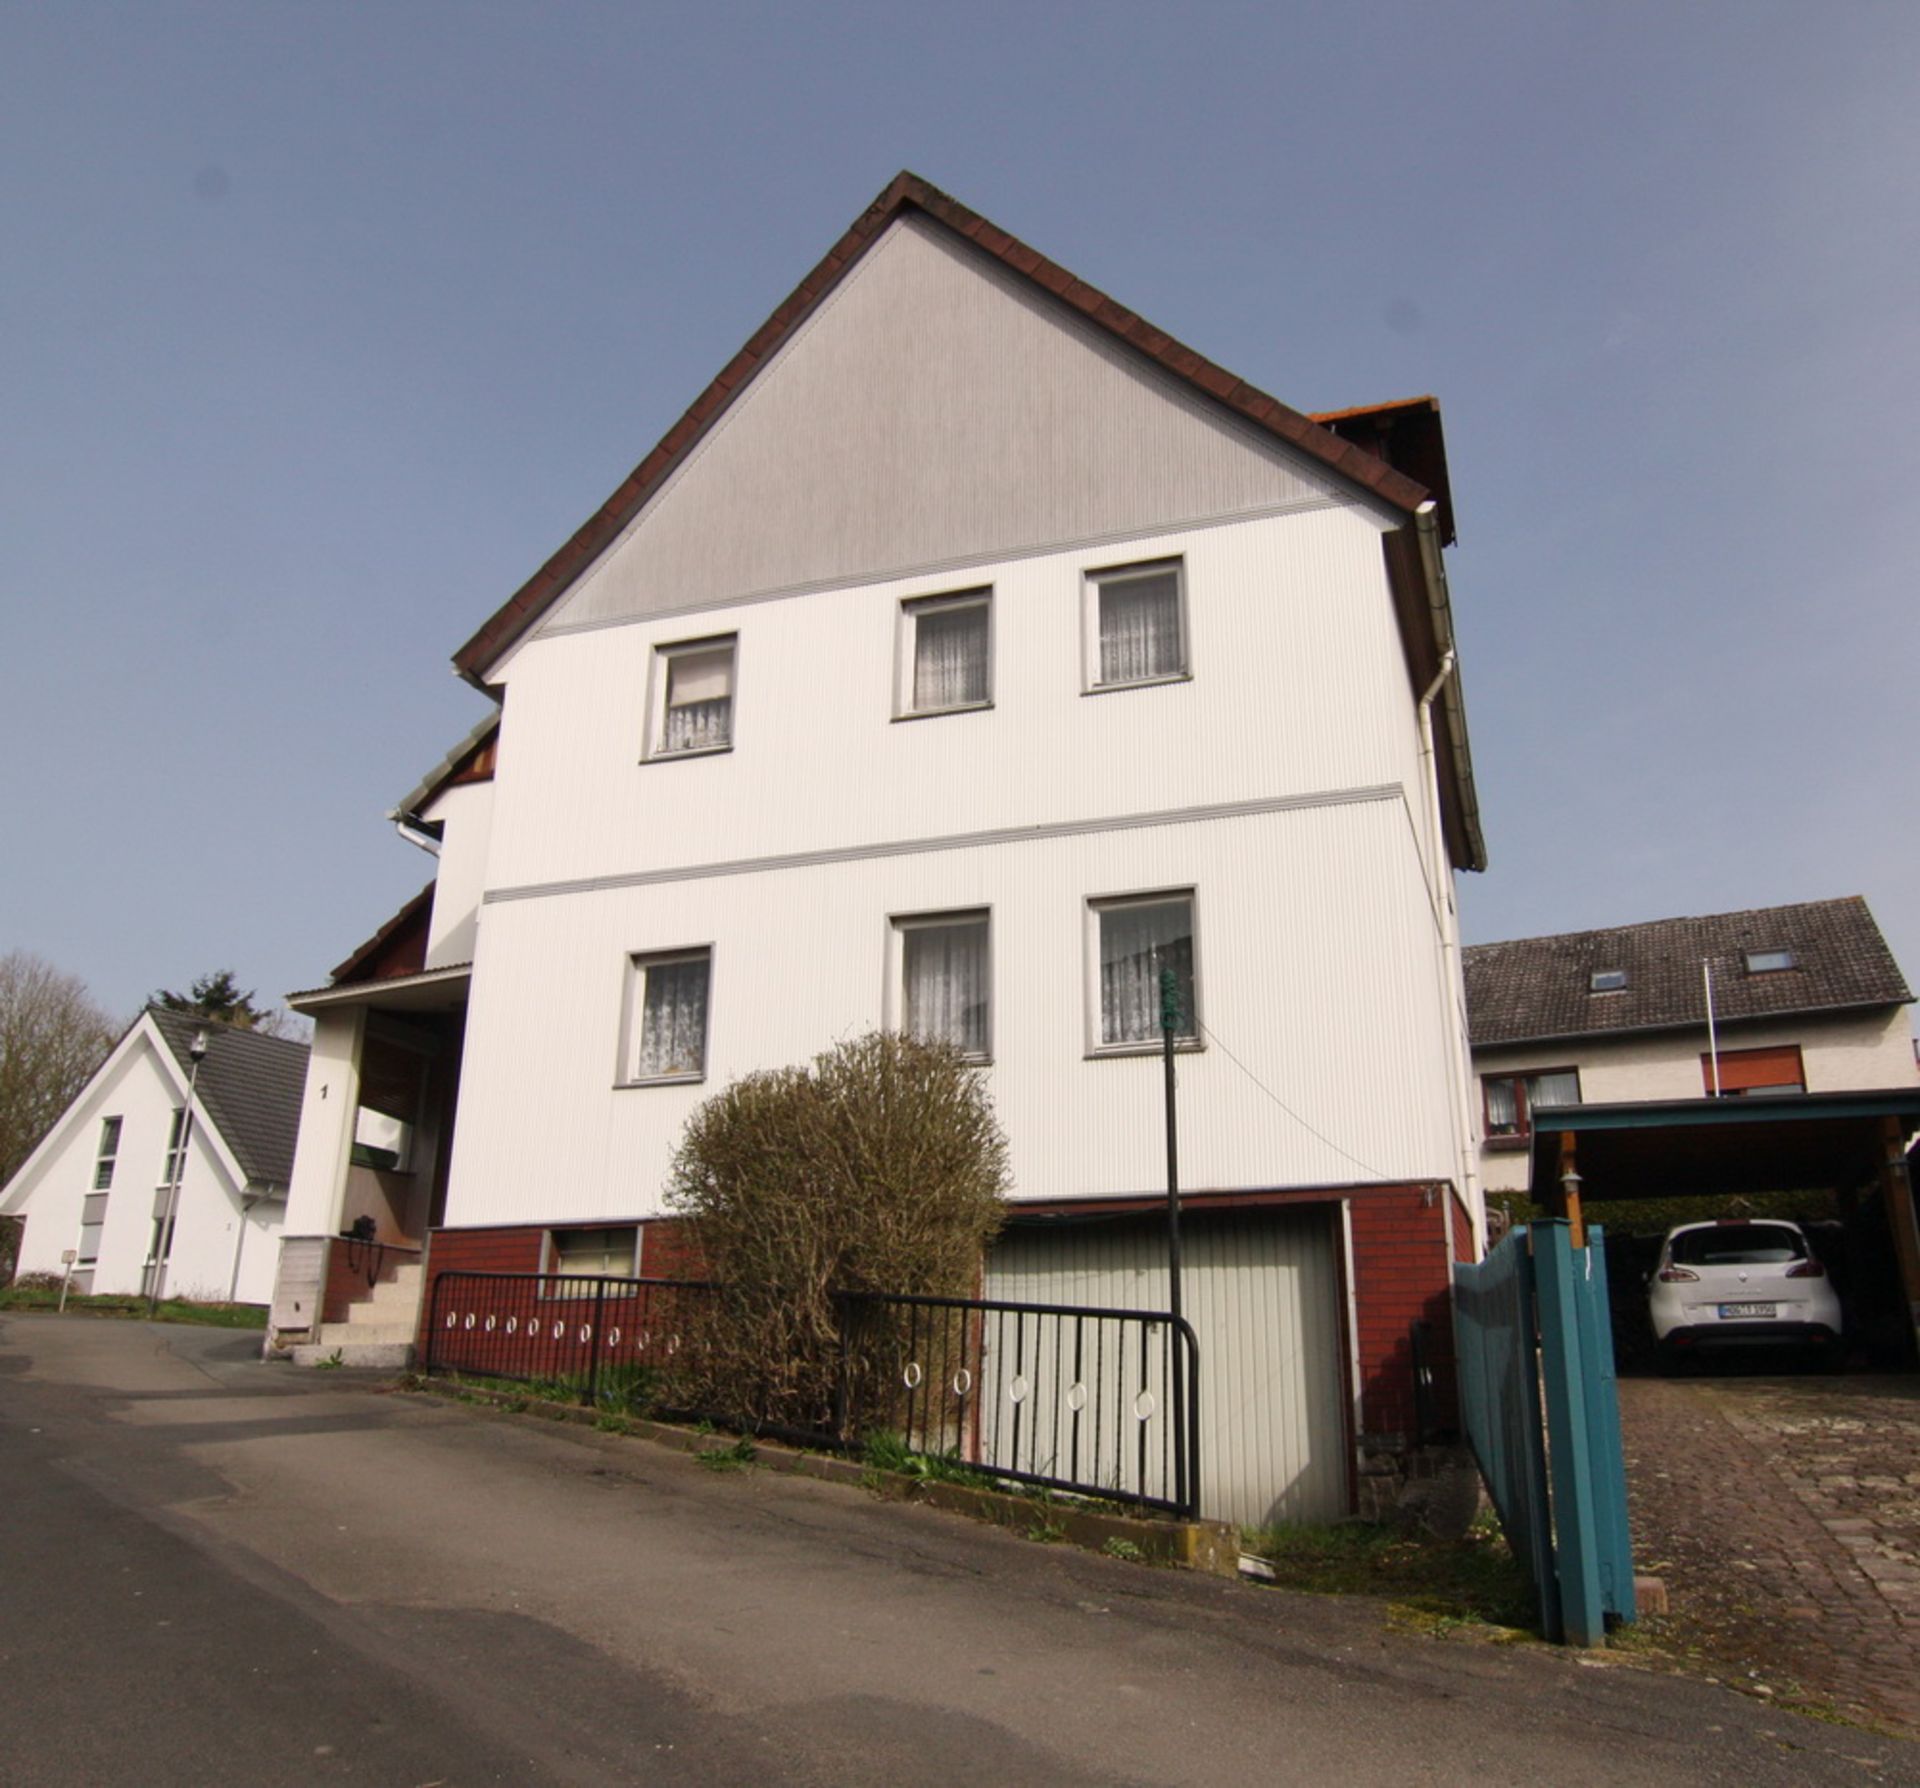 Hessen reg. Germany - Two Storey home + attic & garage